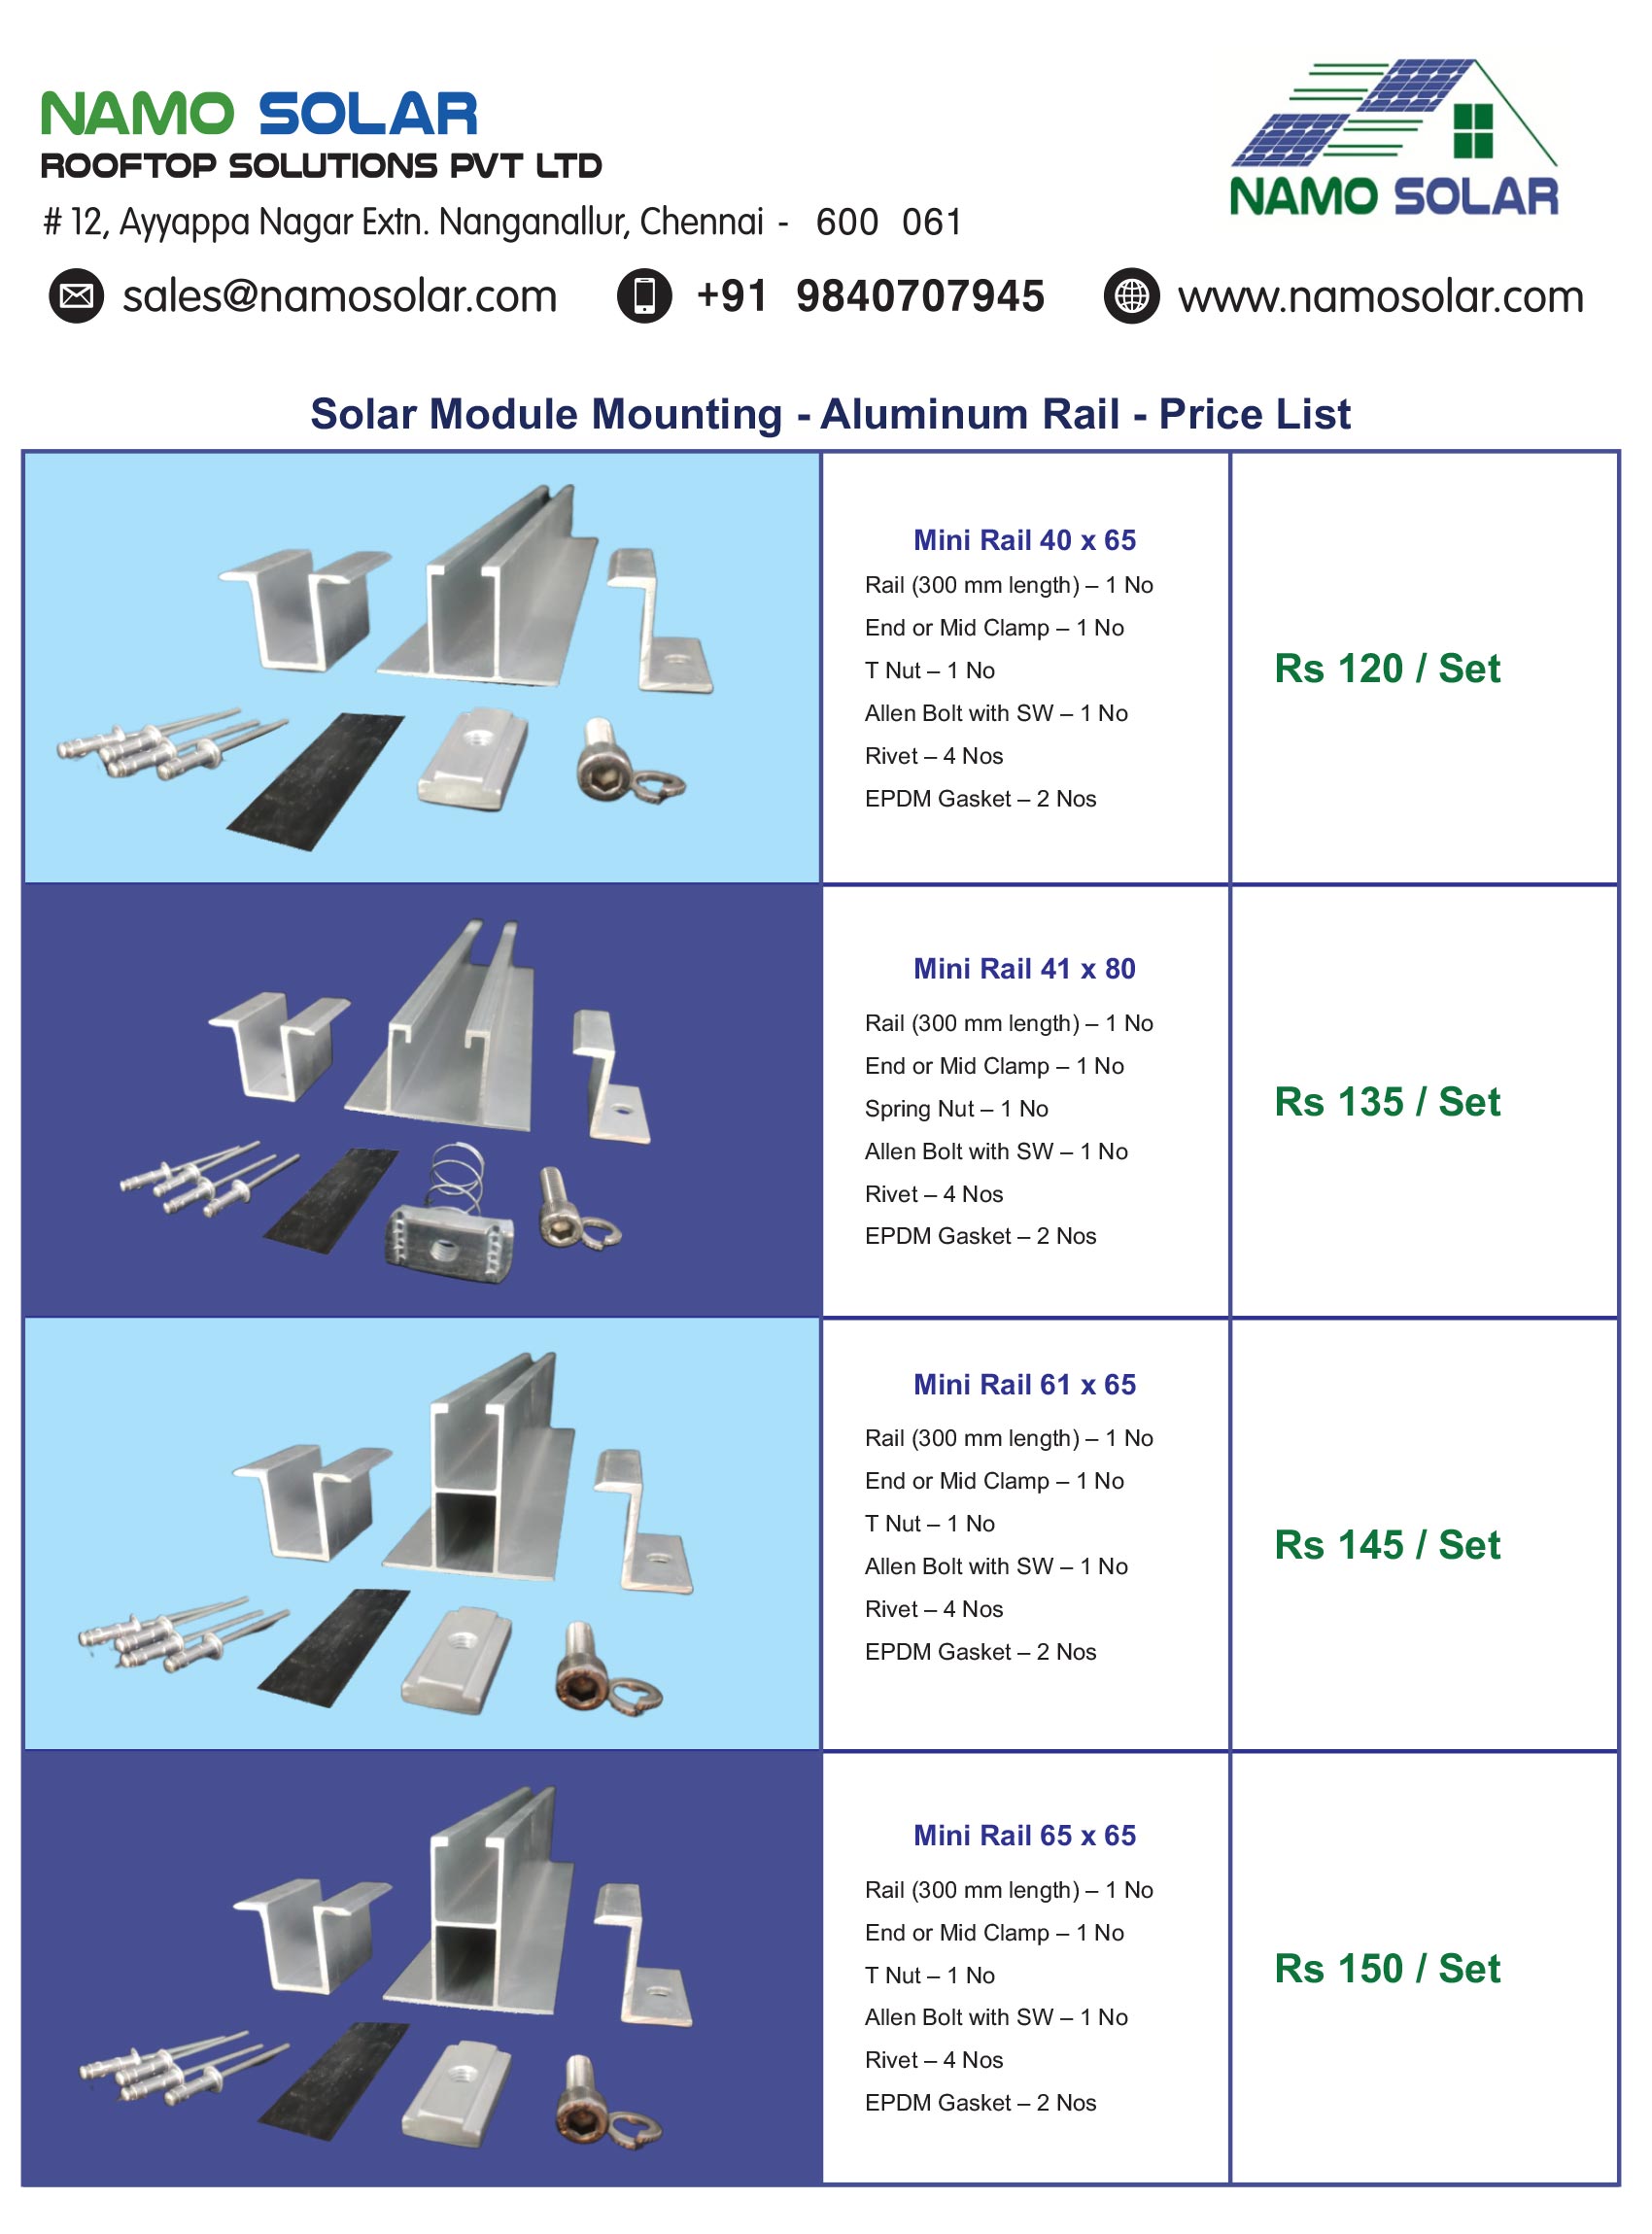 Solar Structure Price in Chennai